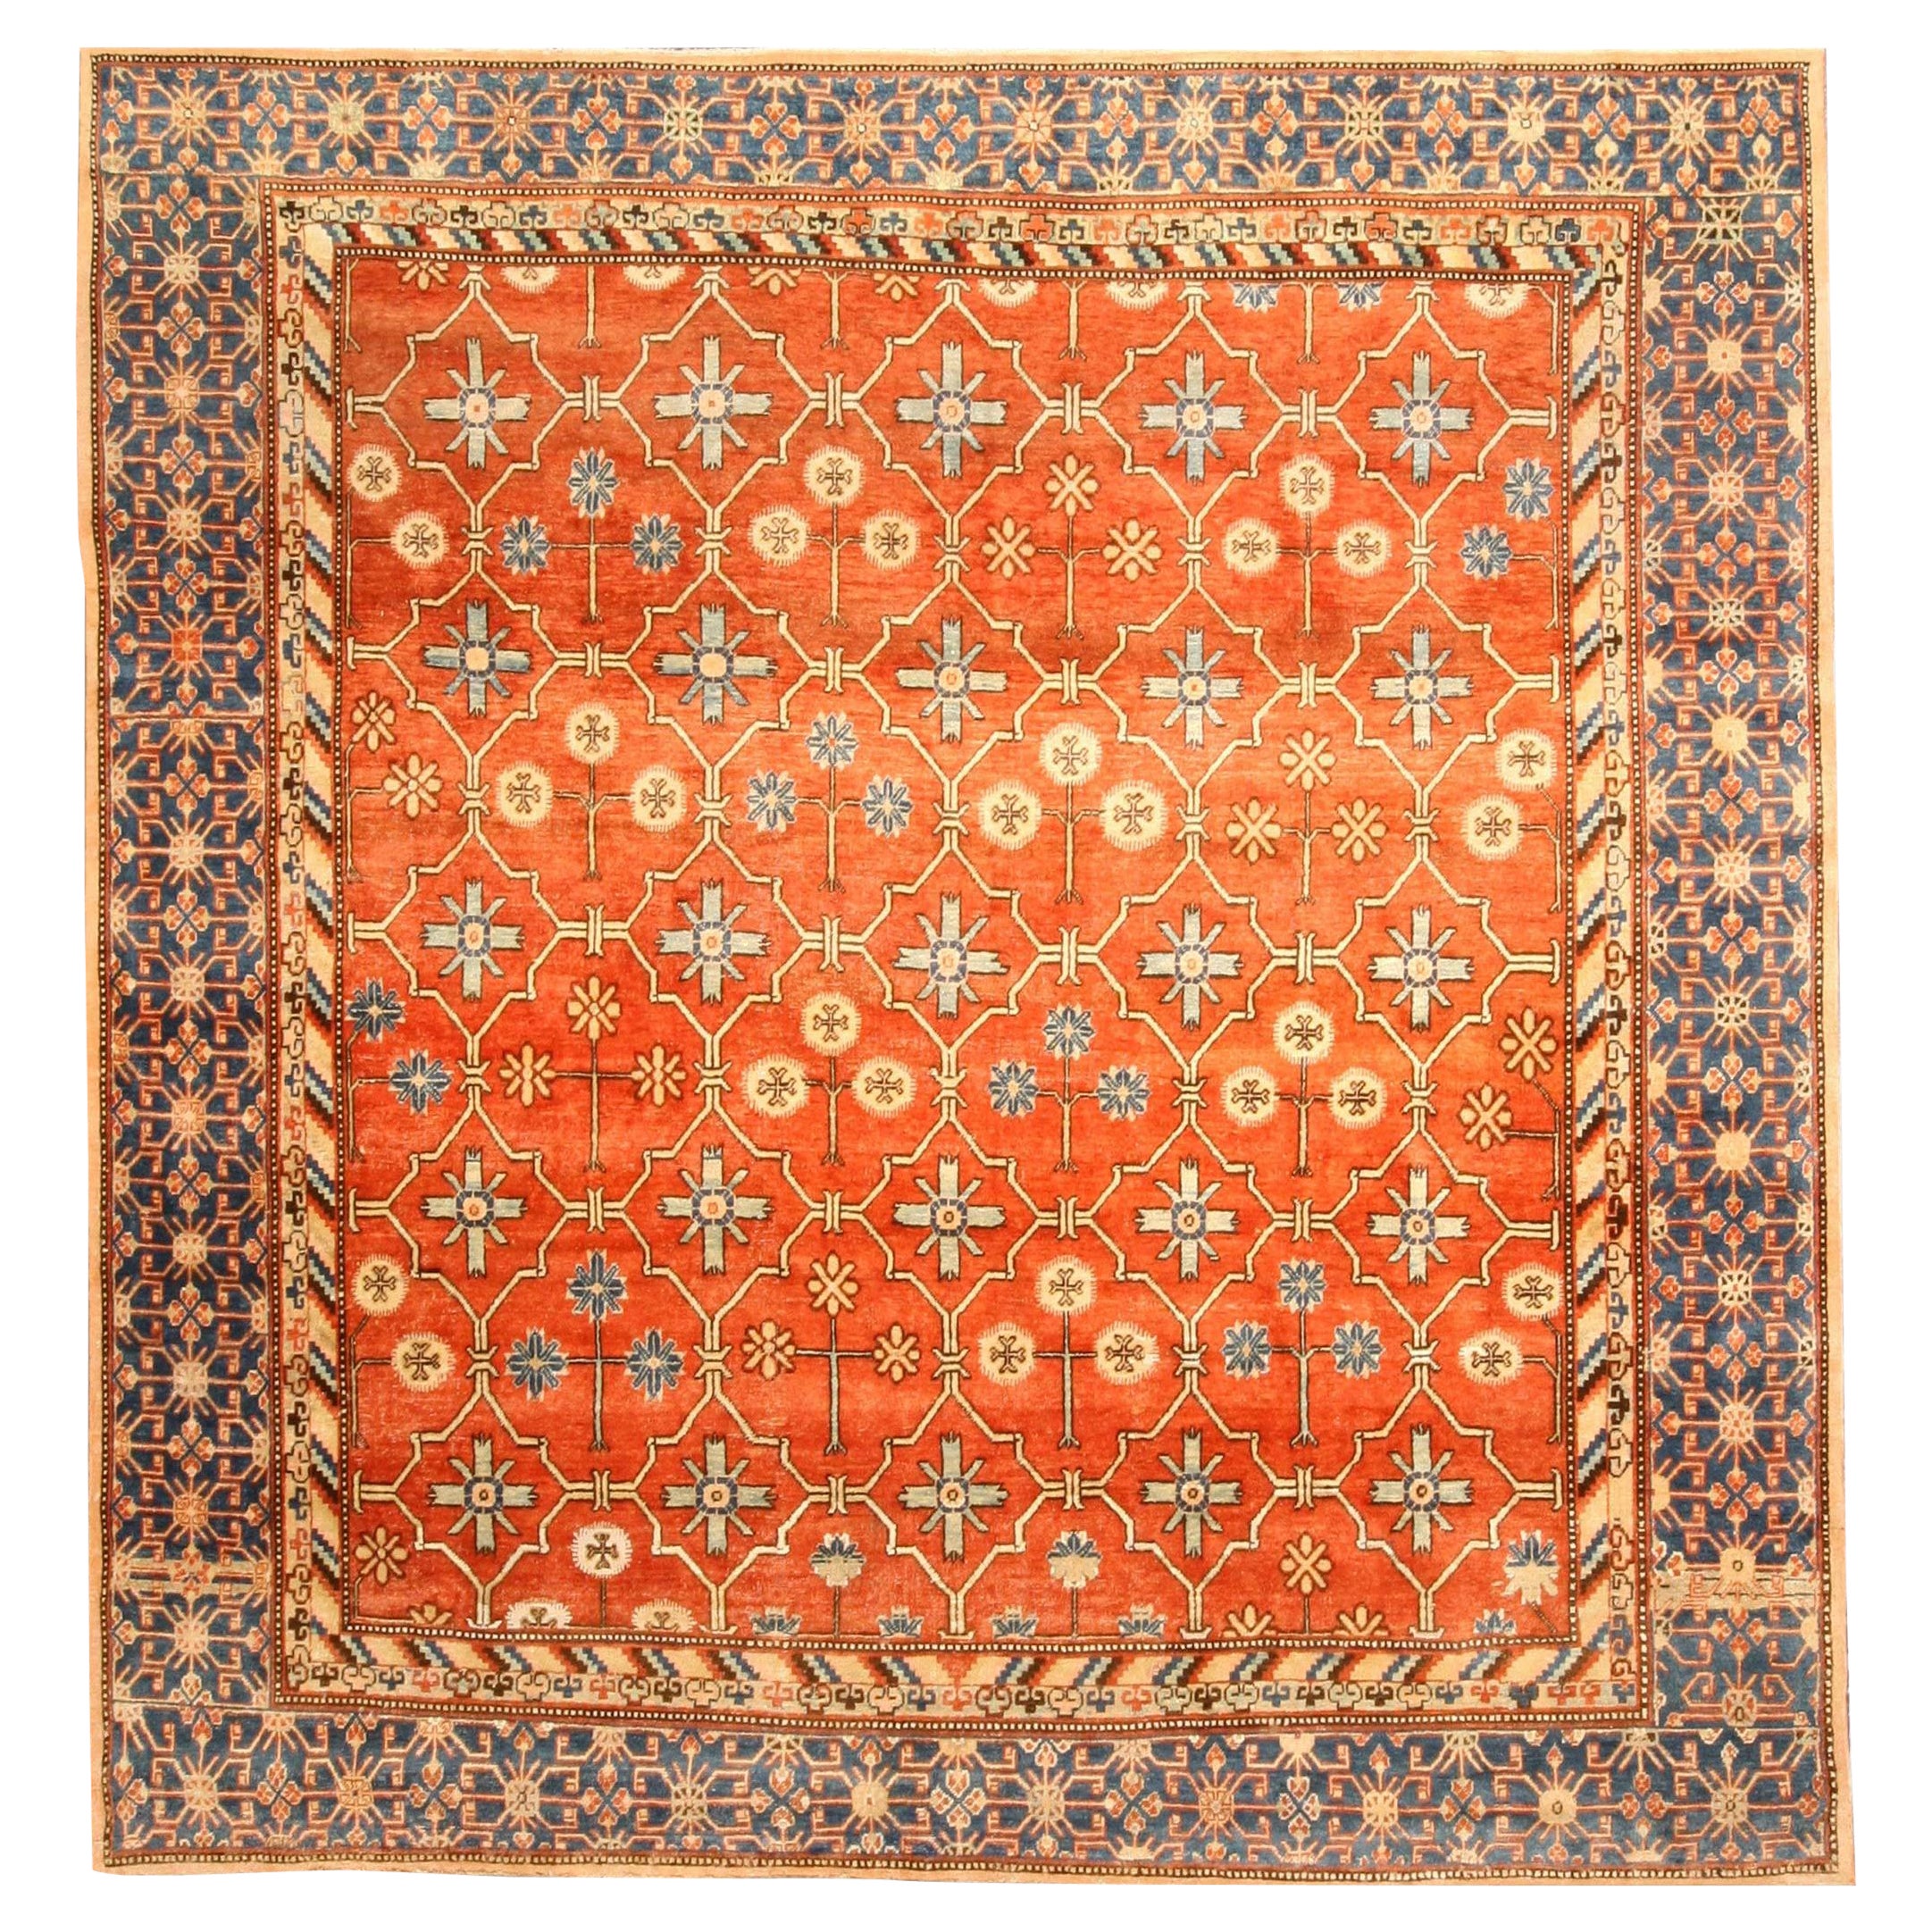 Vintage Samarkand 'Khotan' Rug